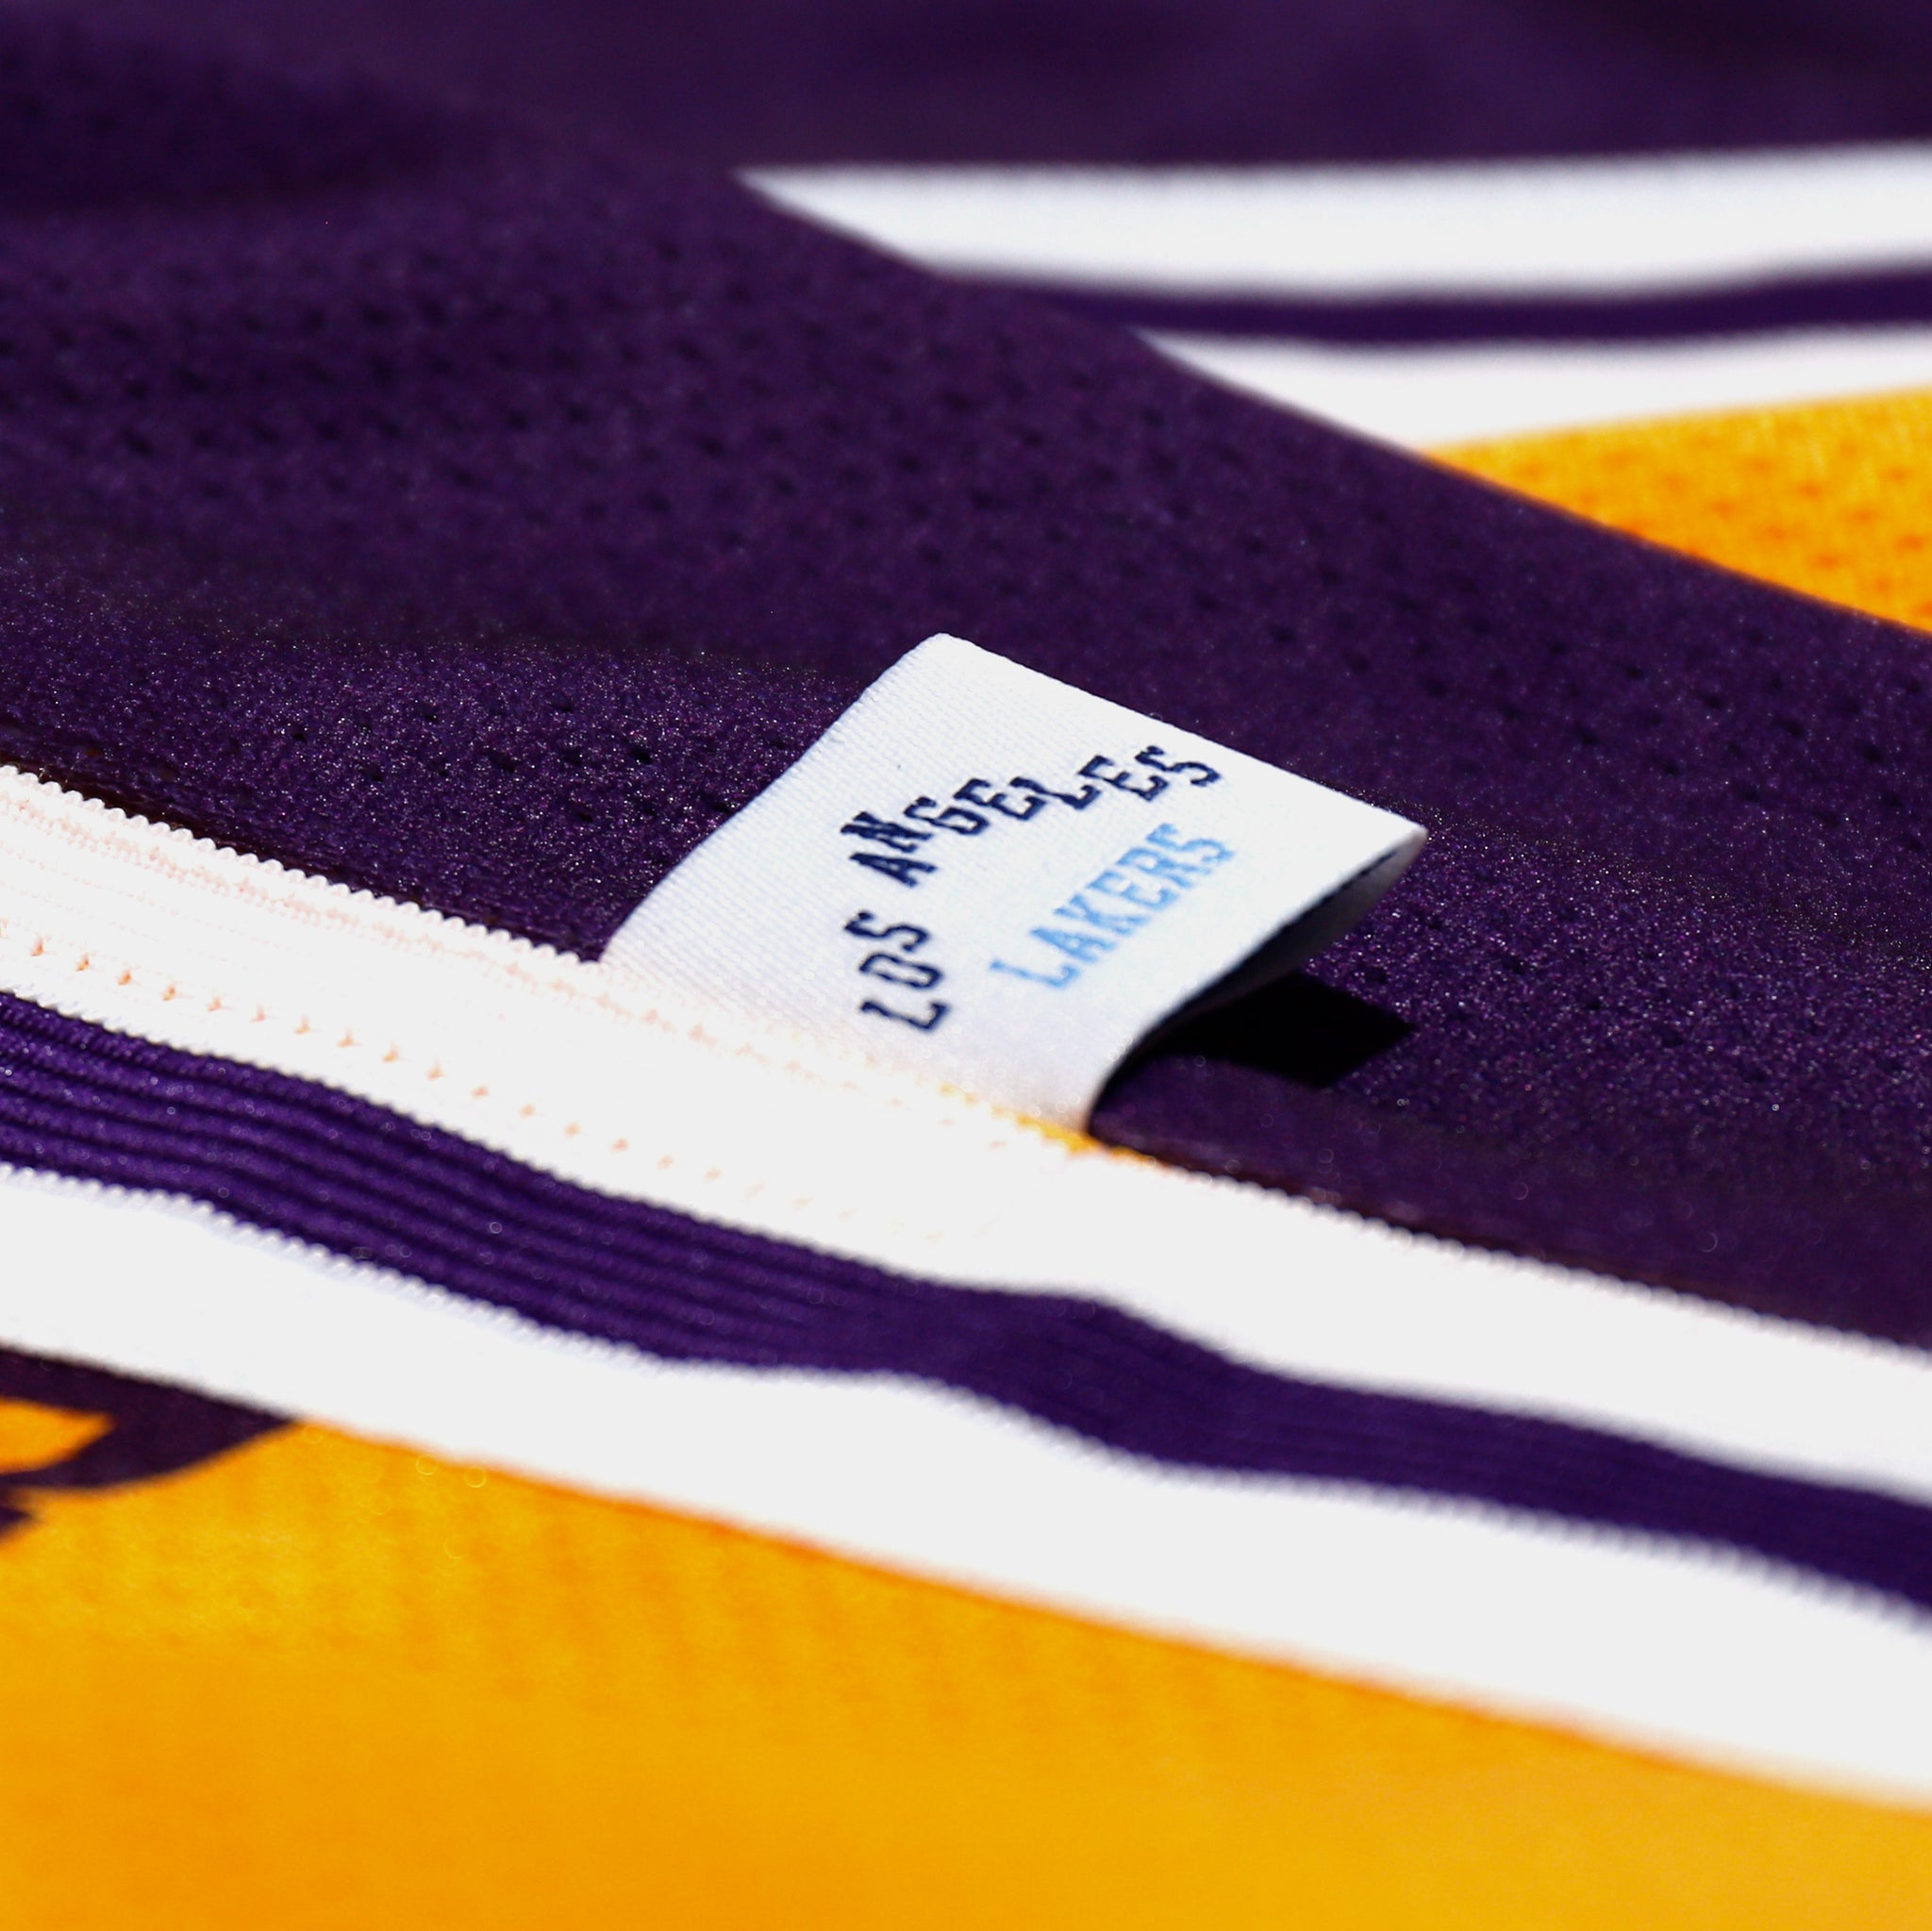 LA Lakers Shorts — Grungy Gentleman